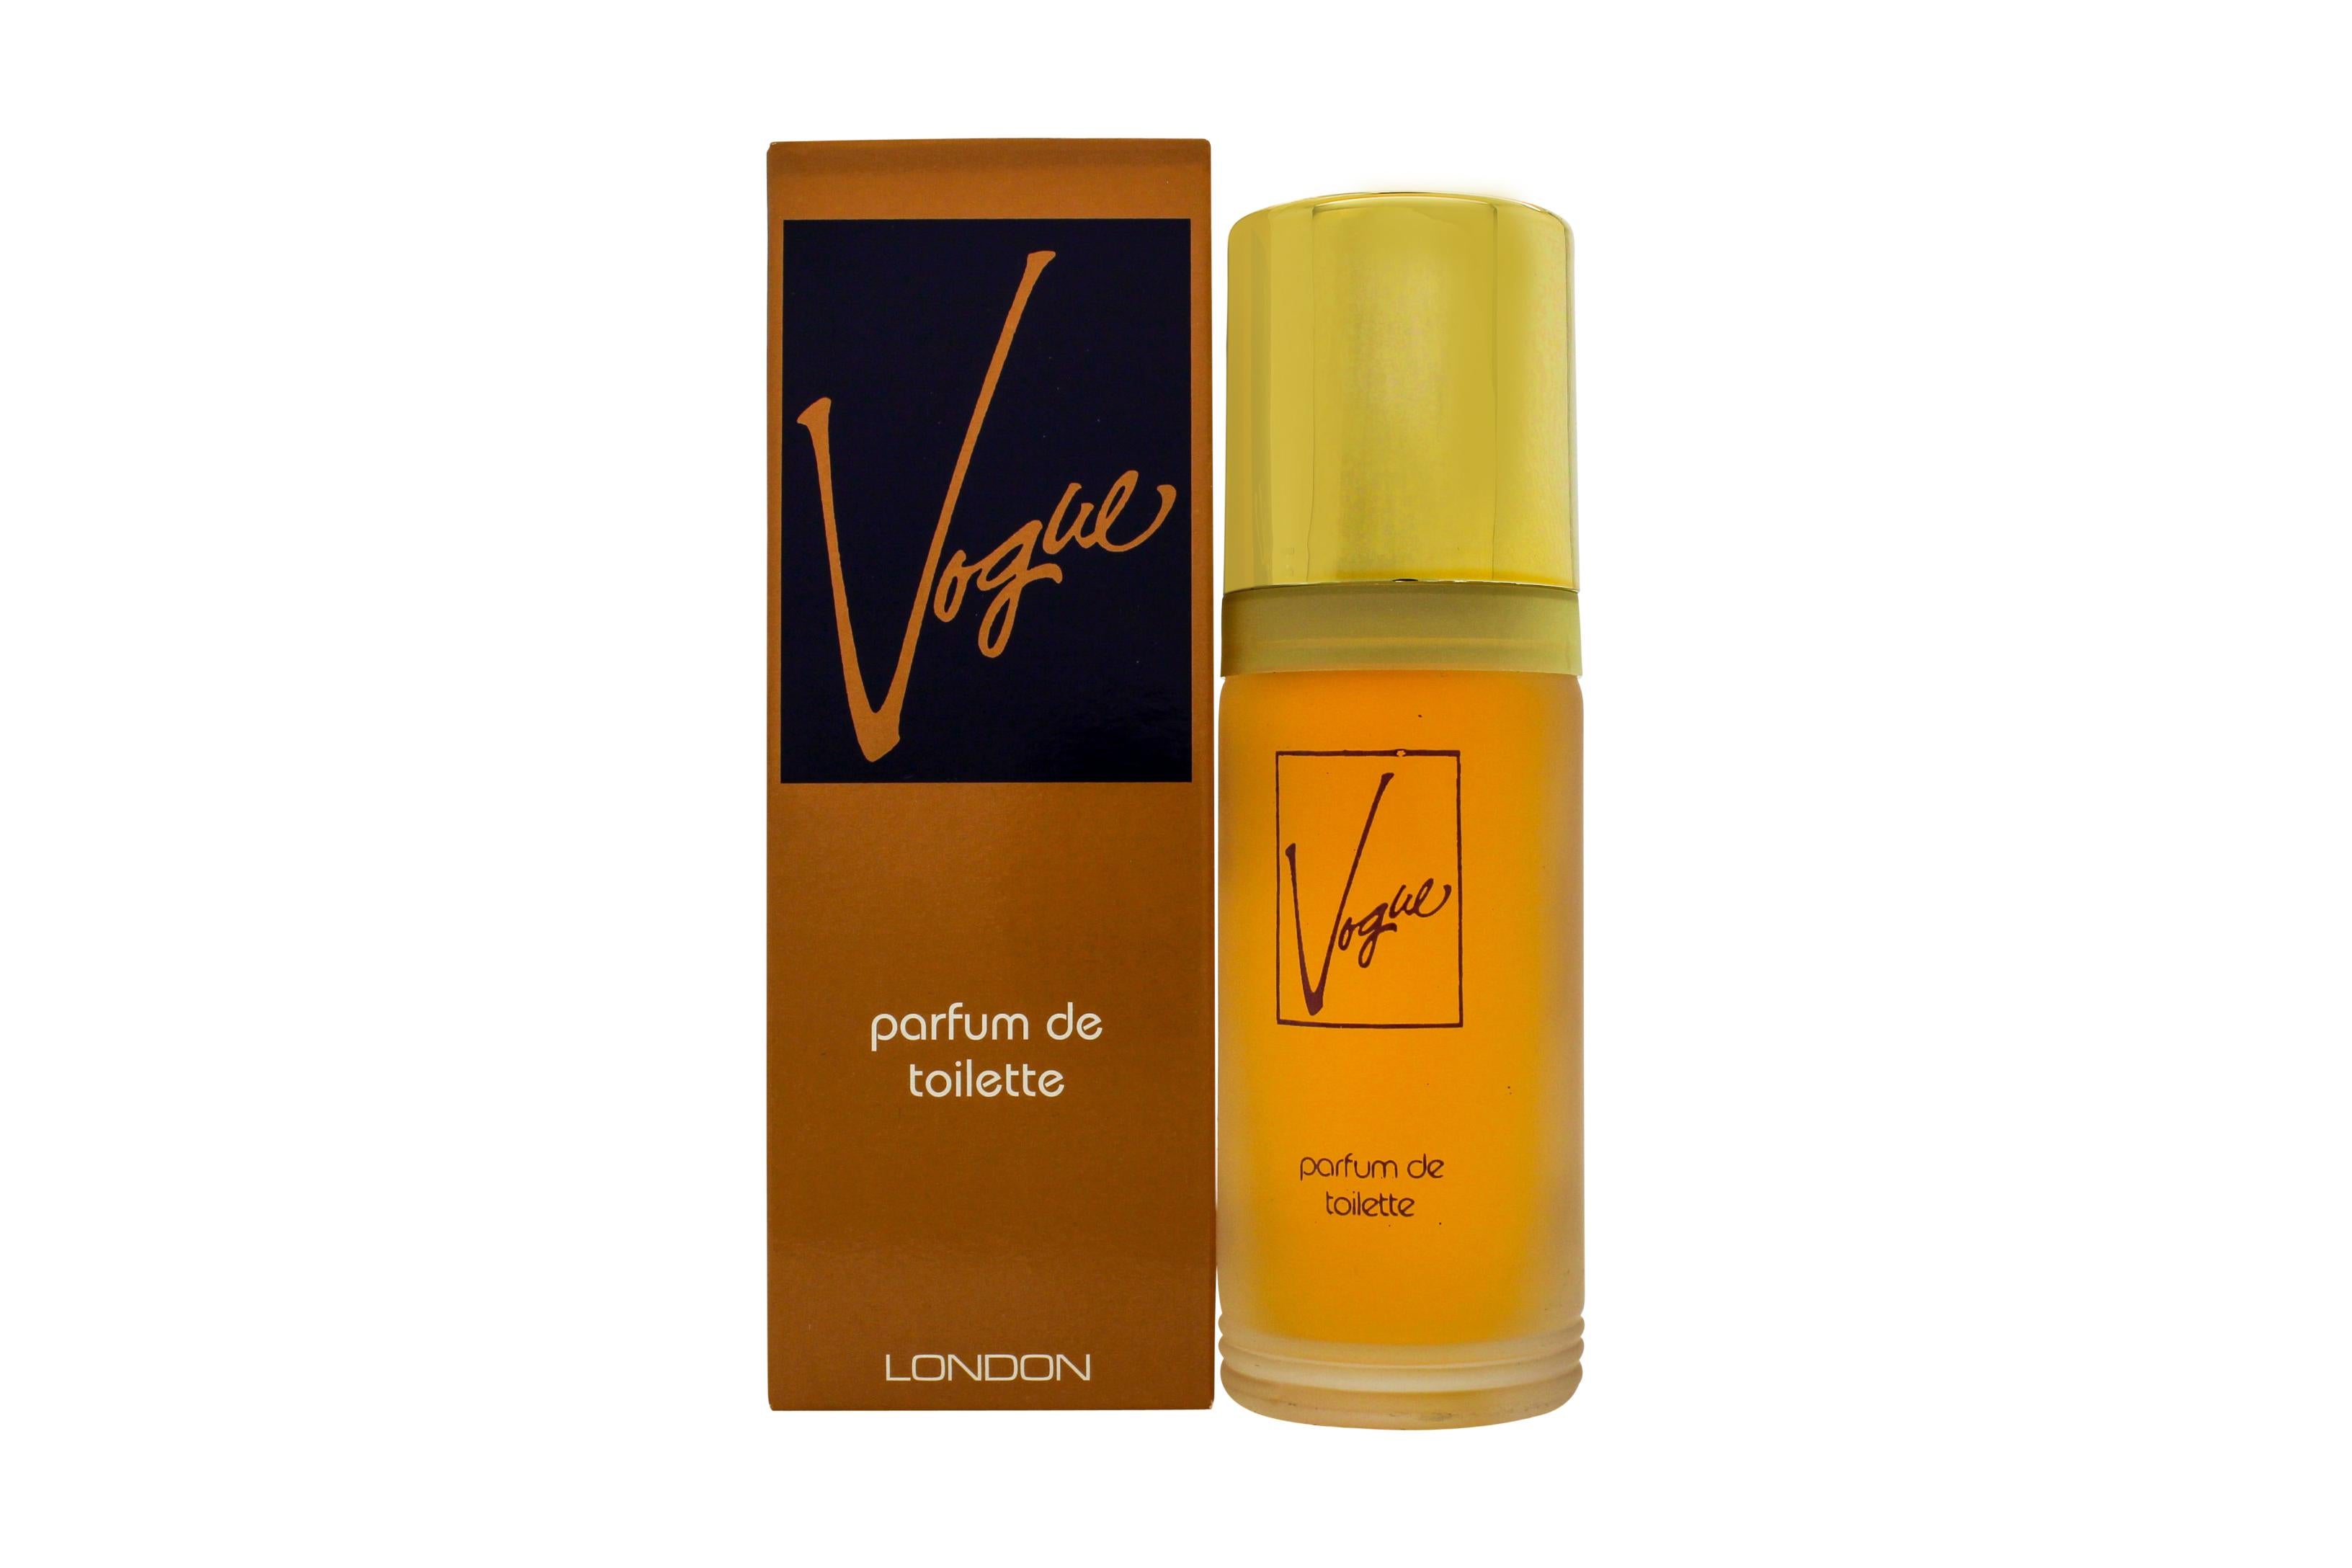 View Milton Lloyd Vogue Parfum de Toilette 55ml Spray information